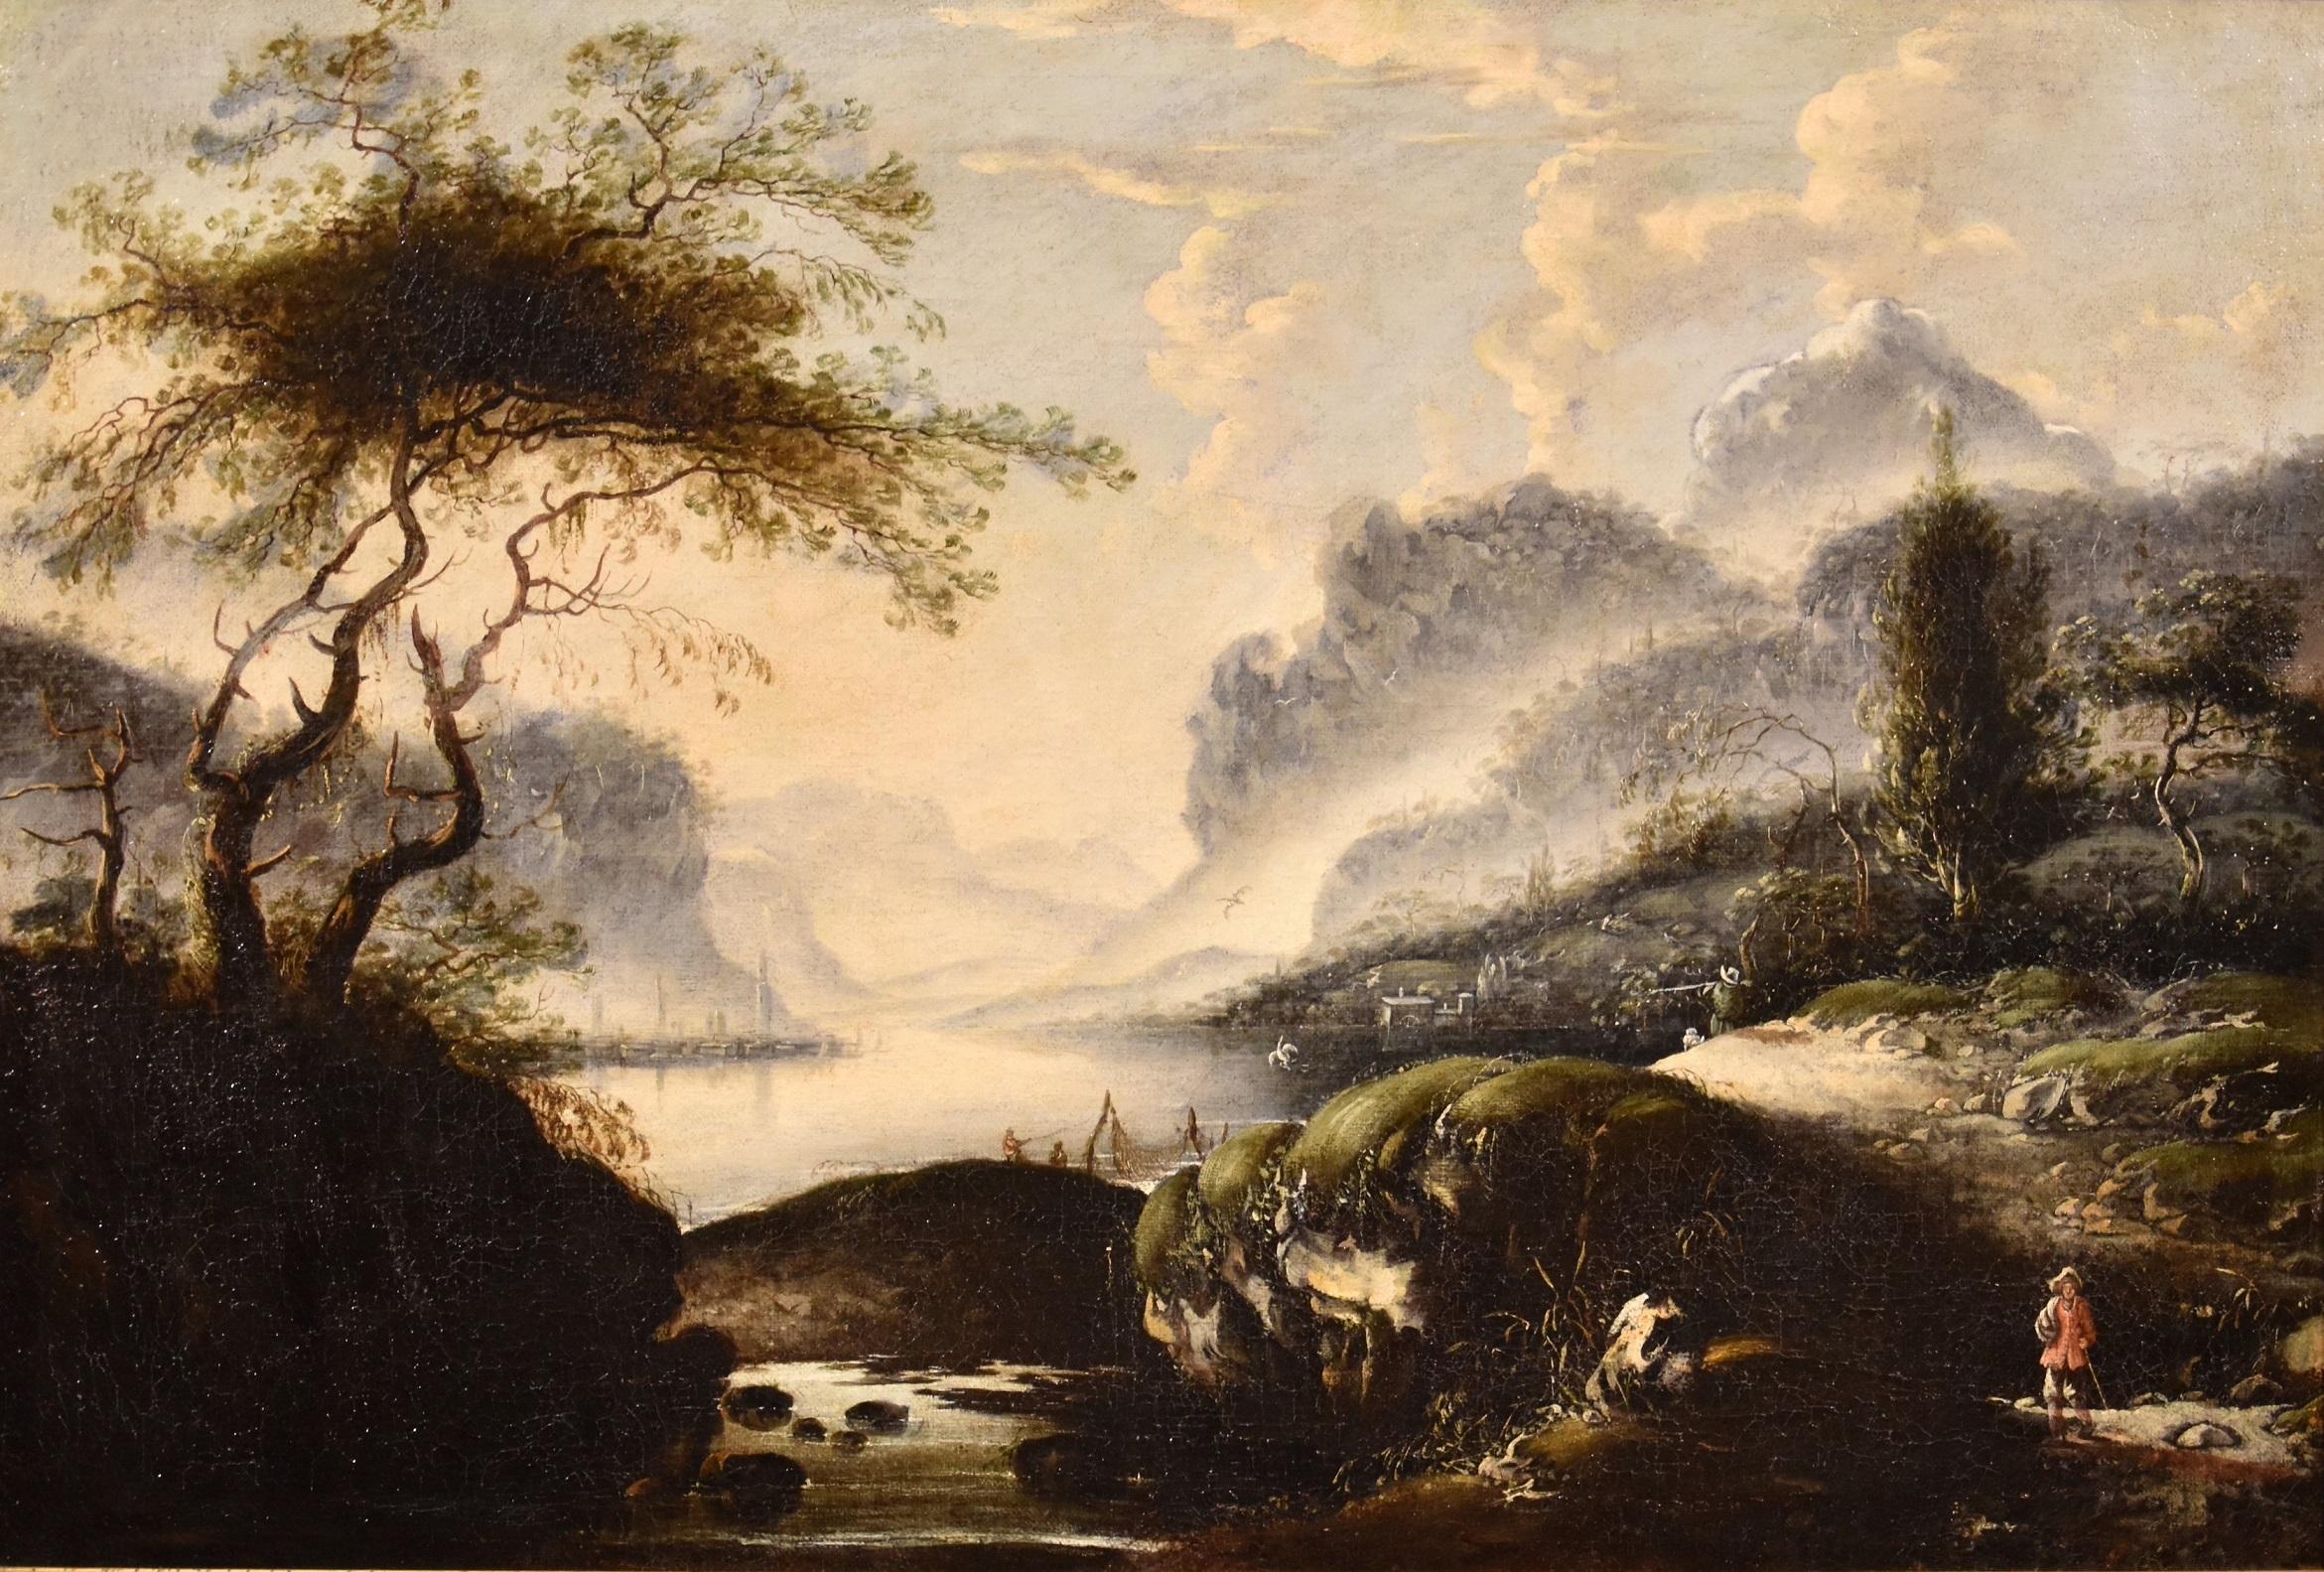 De Jode Winter Landschaftsgemälde Öl auf Leinwand Alter Meister 17. Jahrhundert Flämische Kunst – Painting von Hans de Jode (The Hague, 1630 - Vienna, 1663)